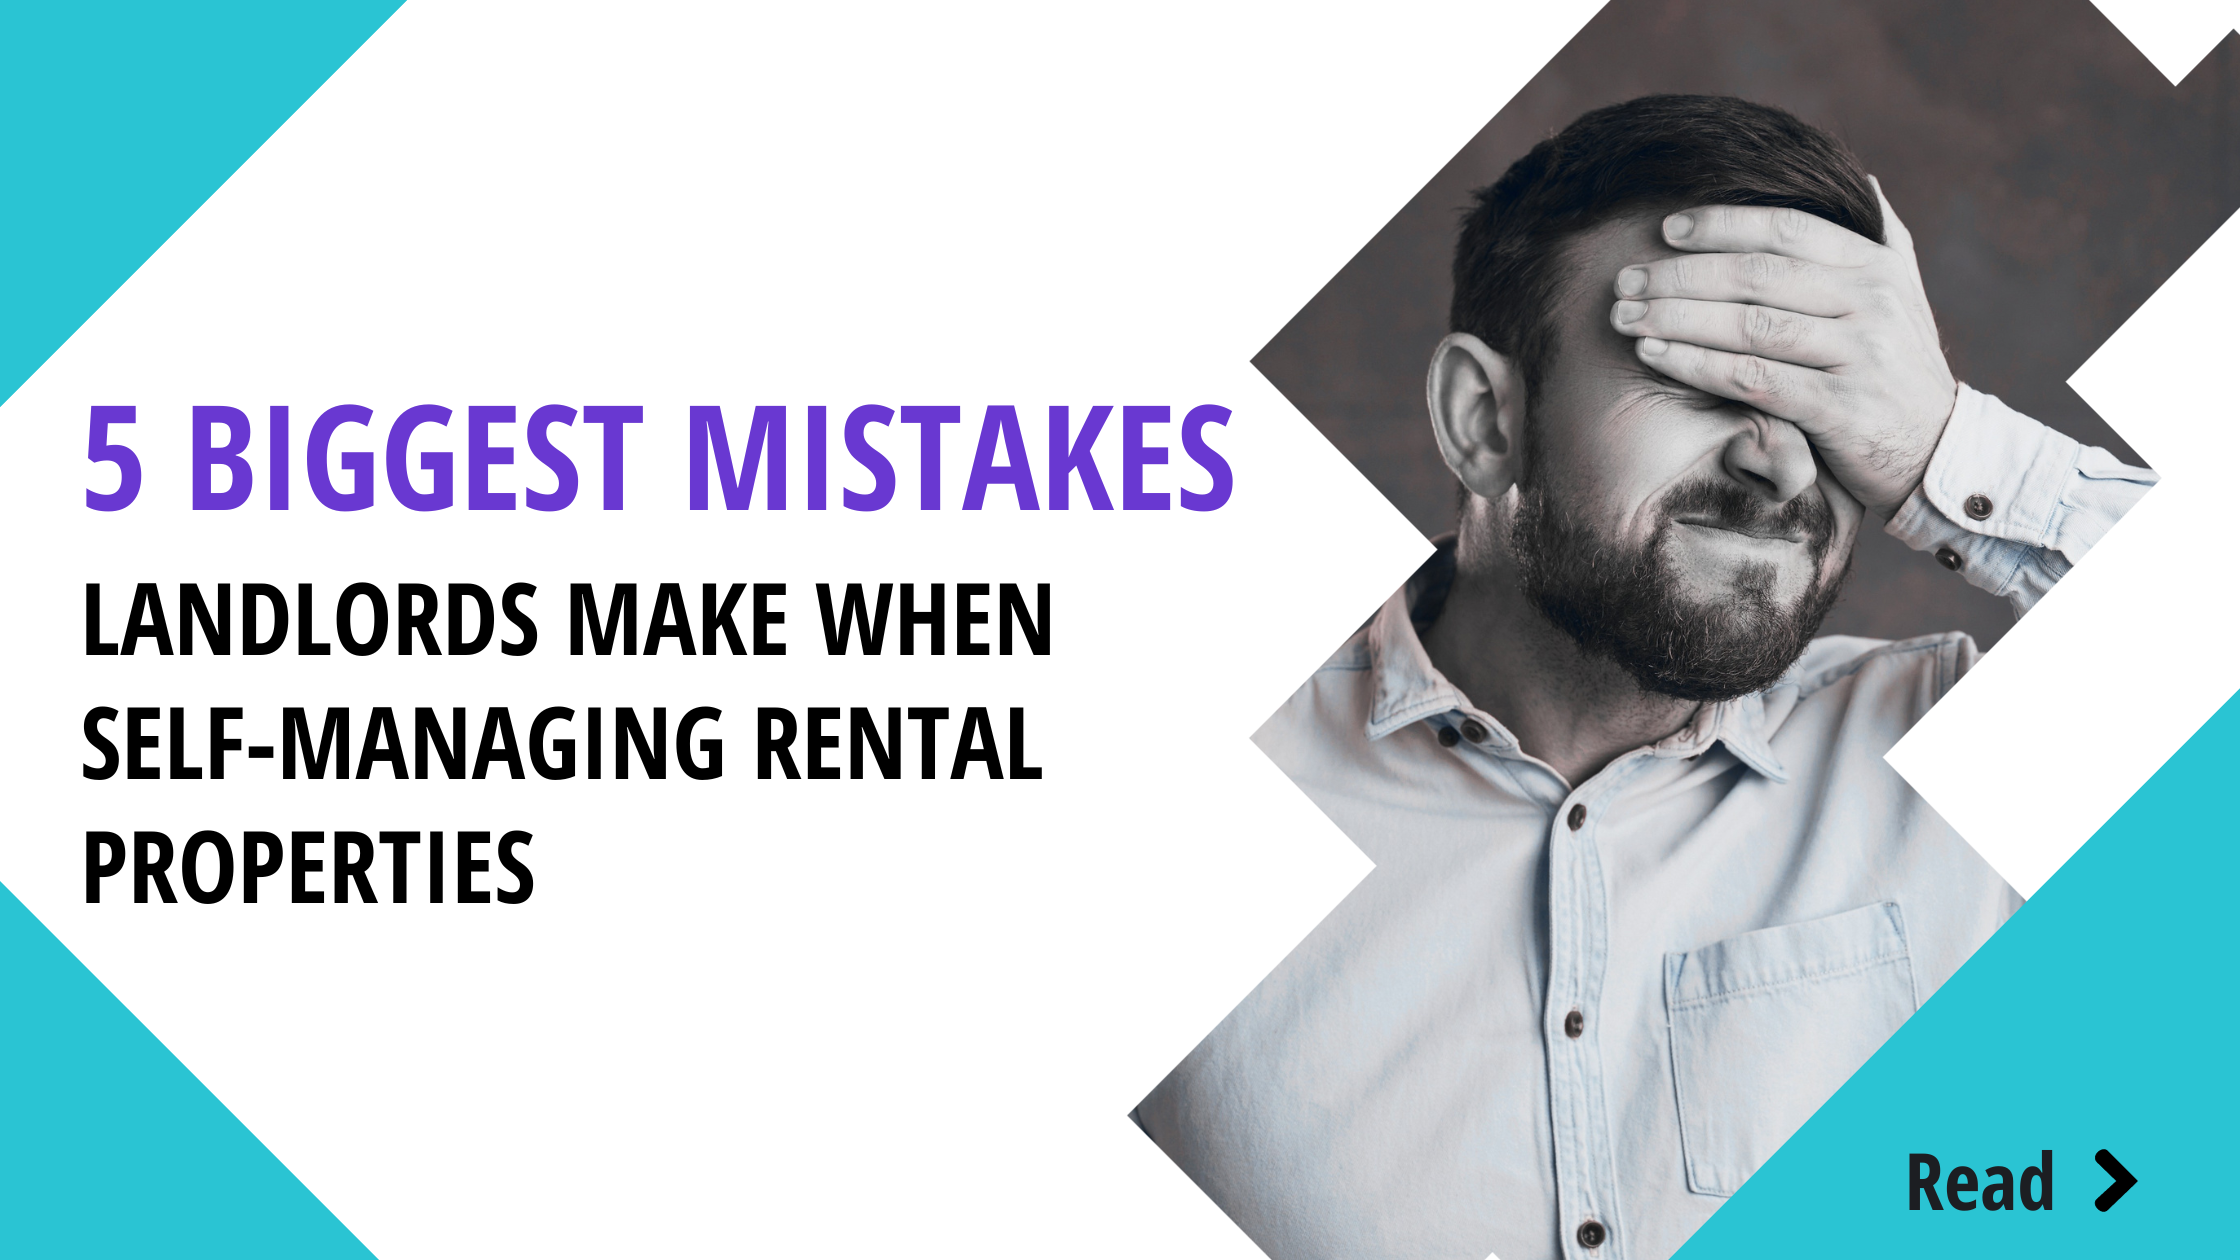 5 Biggest Mistakes Landlords Make When Self-Managing Rental Property in Arizona